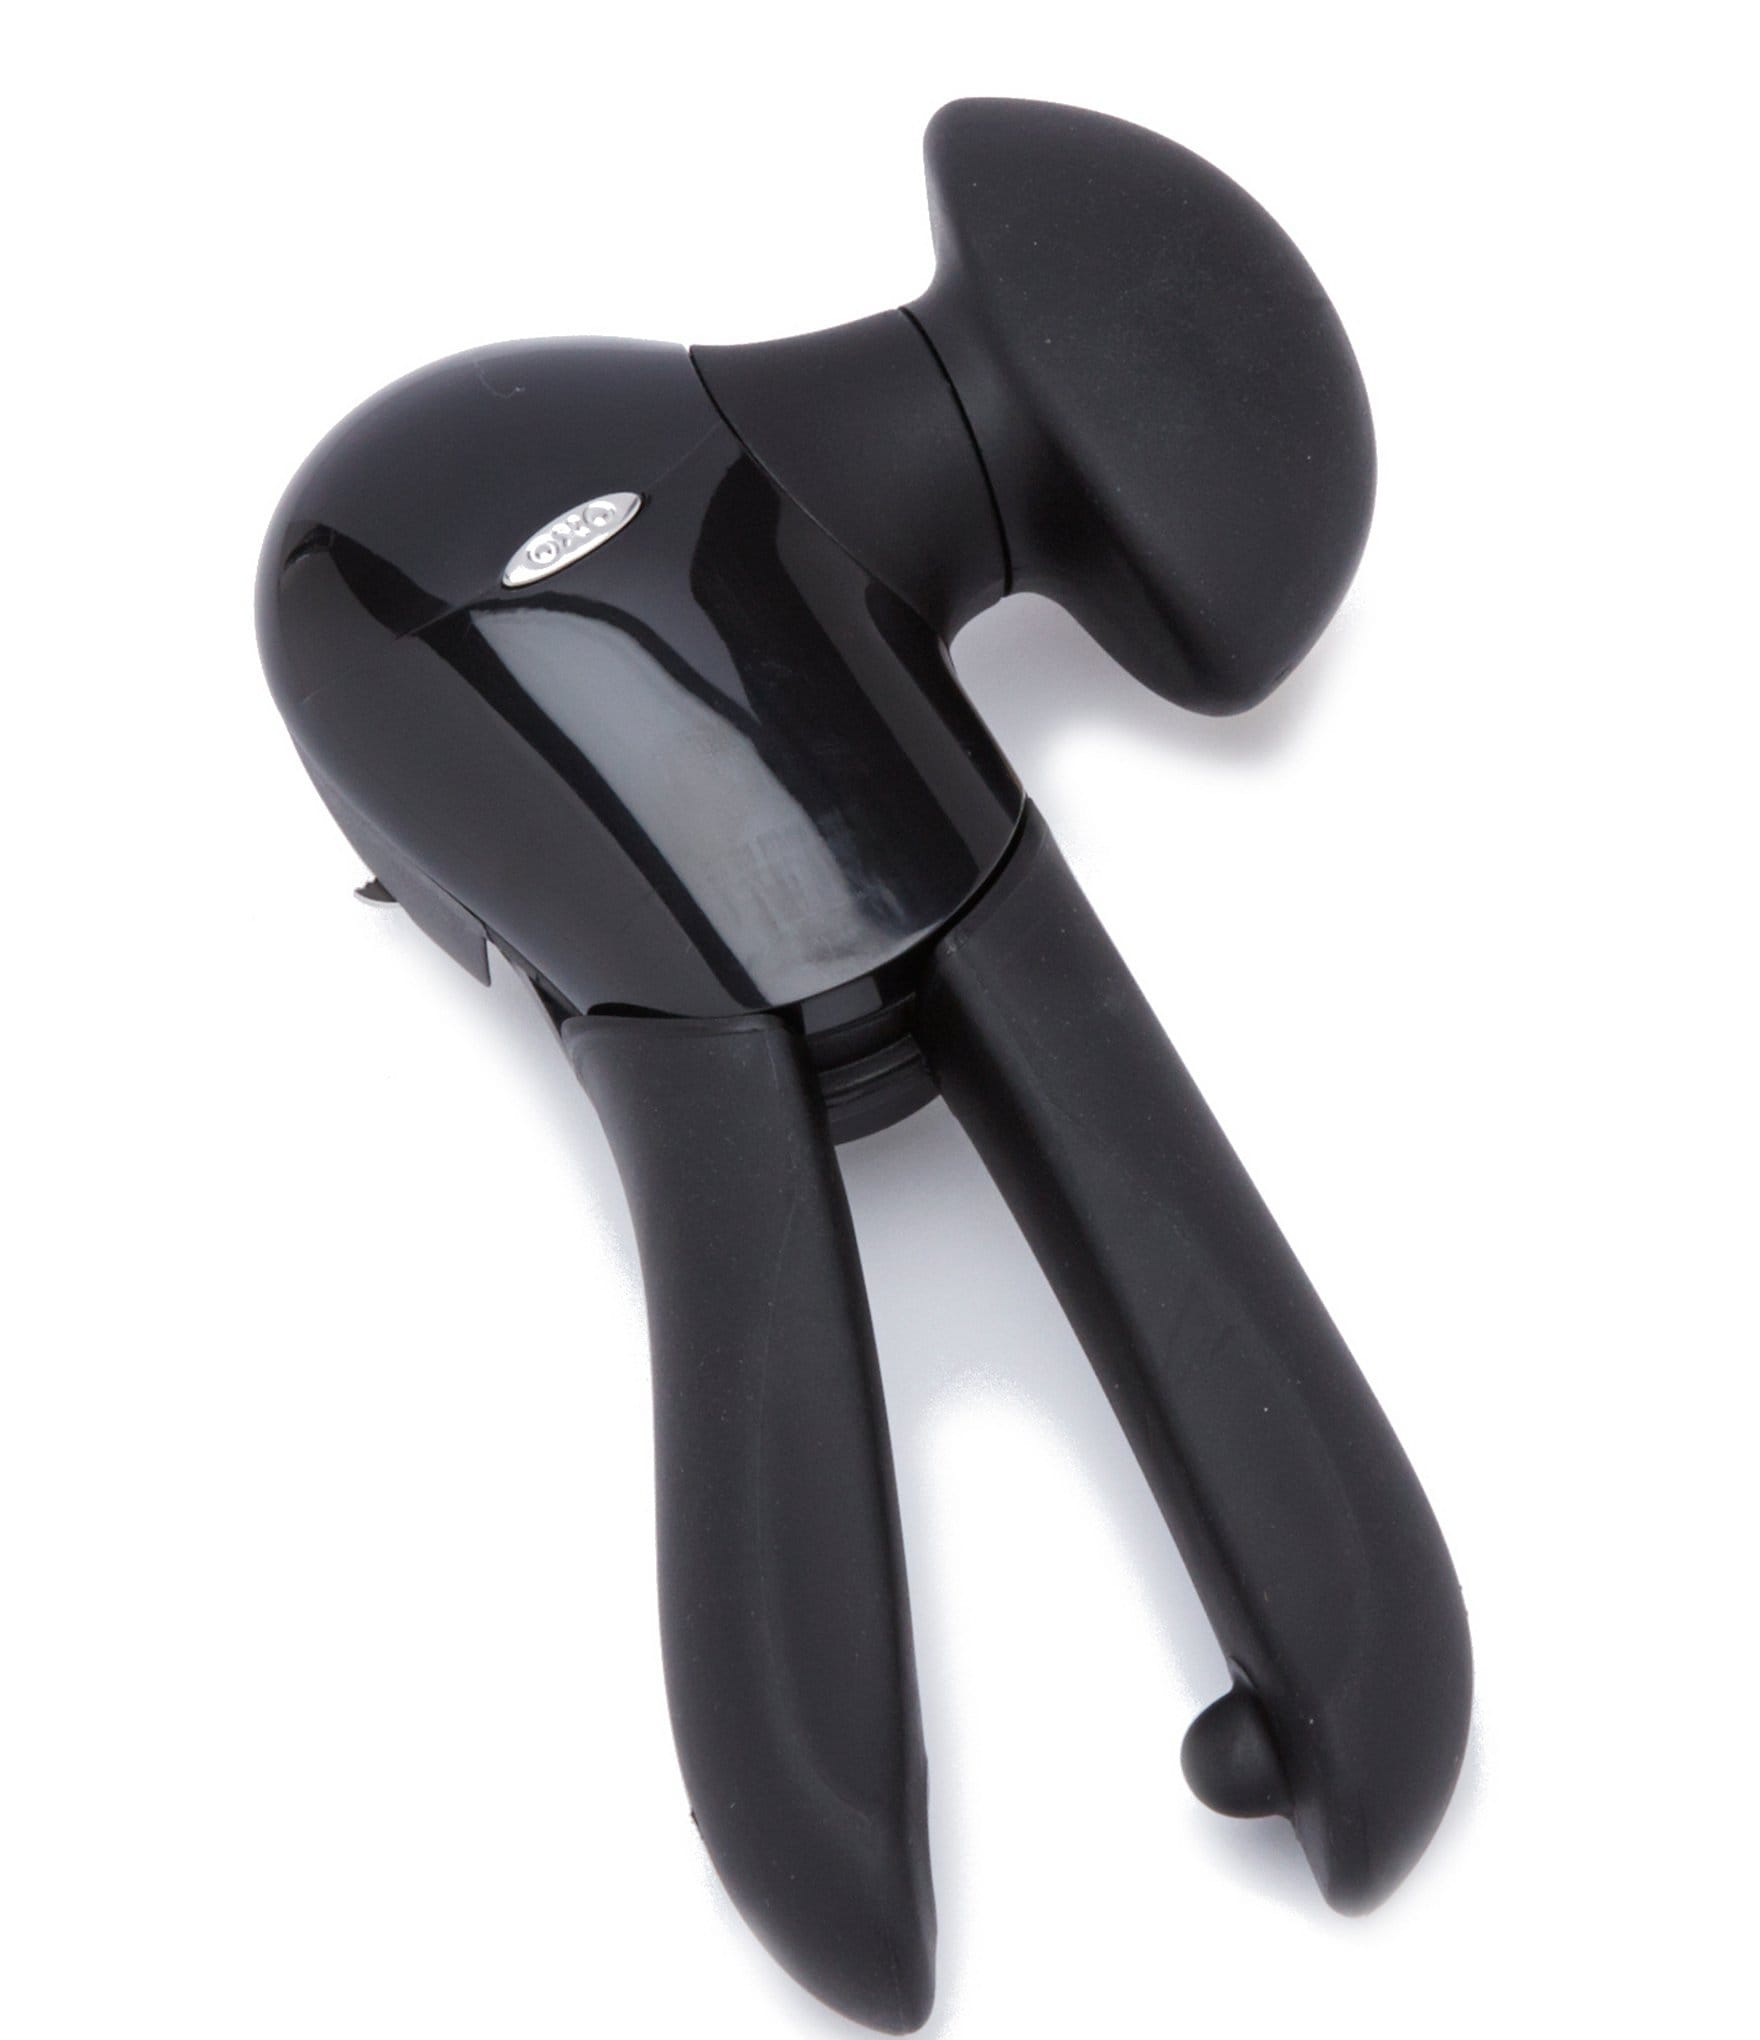 OXO Good Grips Smooth Edge Can Opener : ergonomic handles